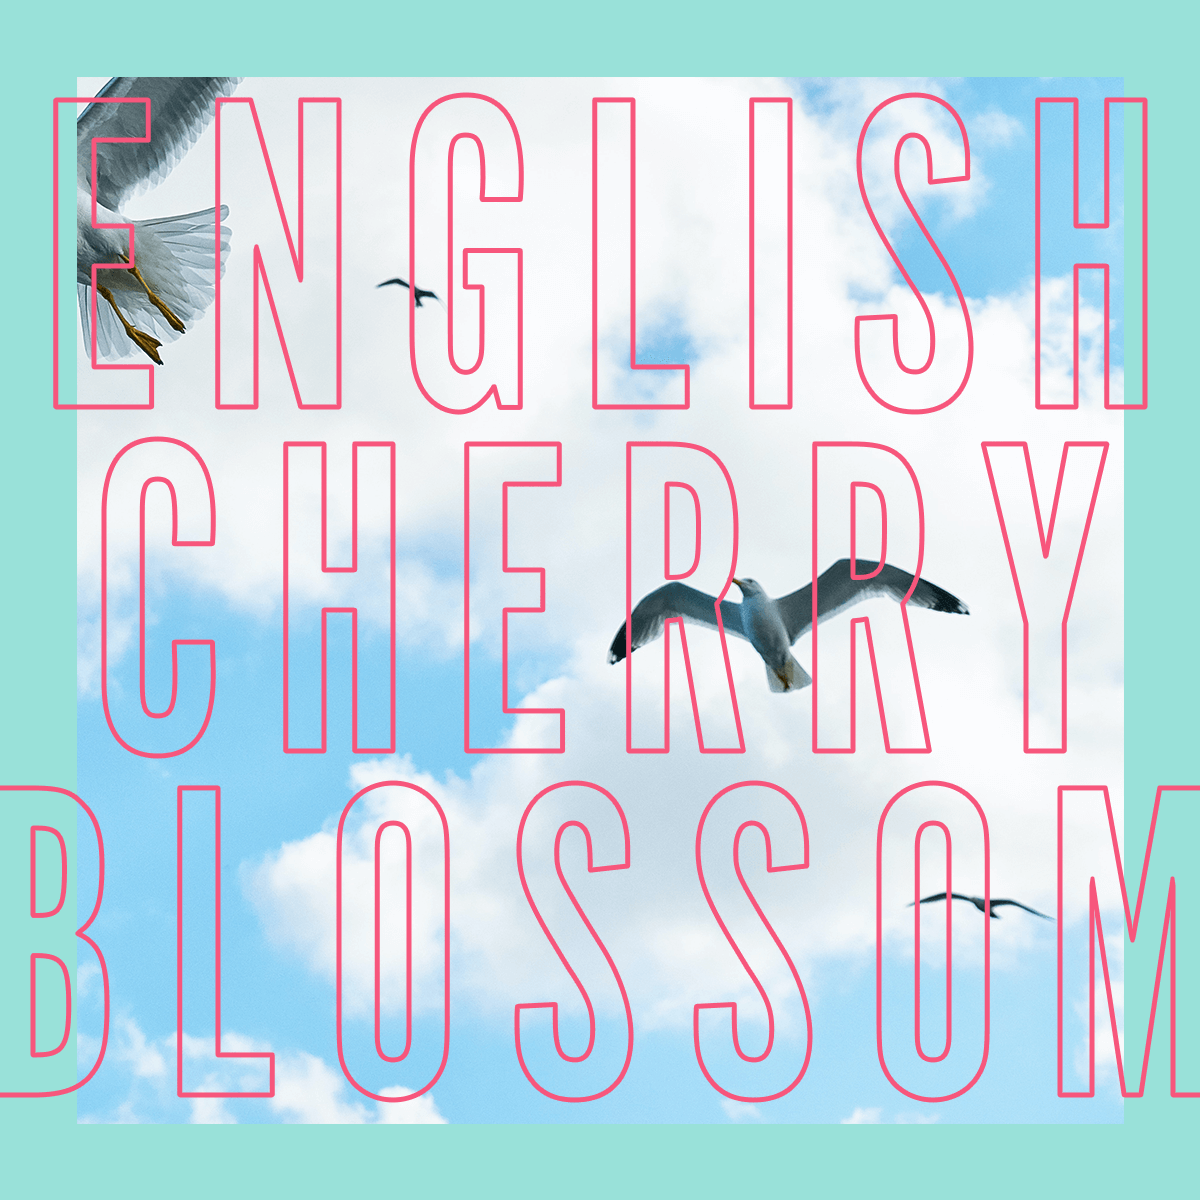 English Cherry Blossom Fragrance 30ml